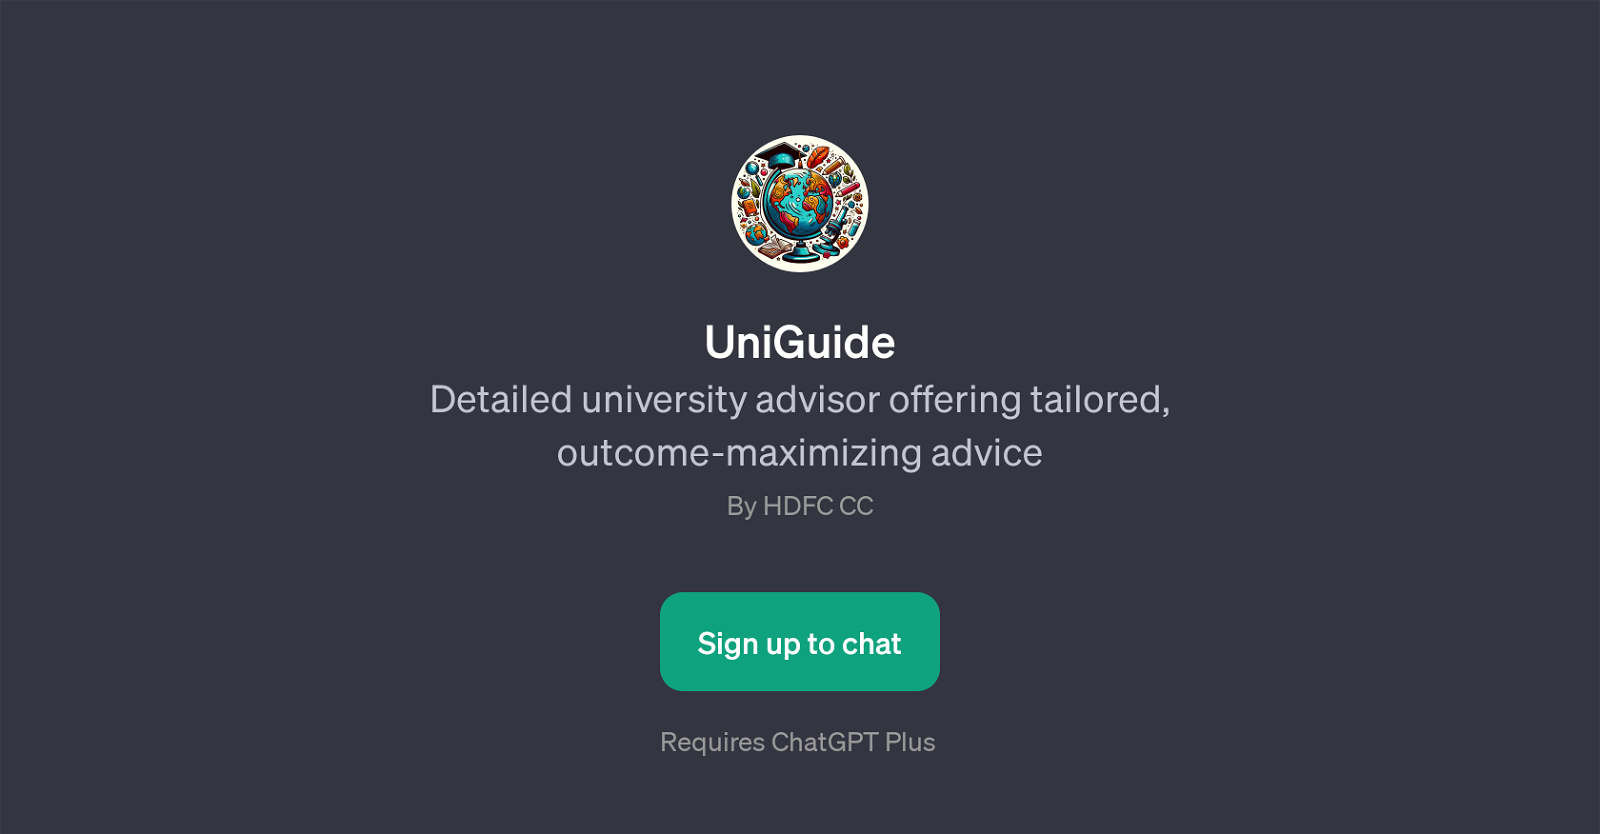 UniGuide website